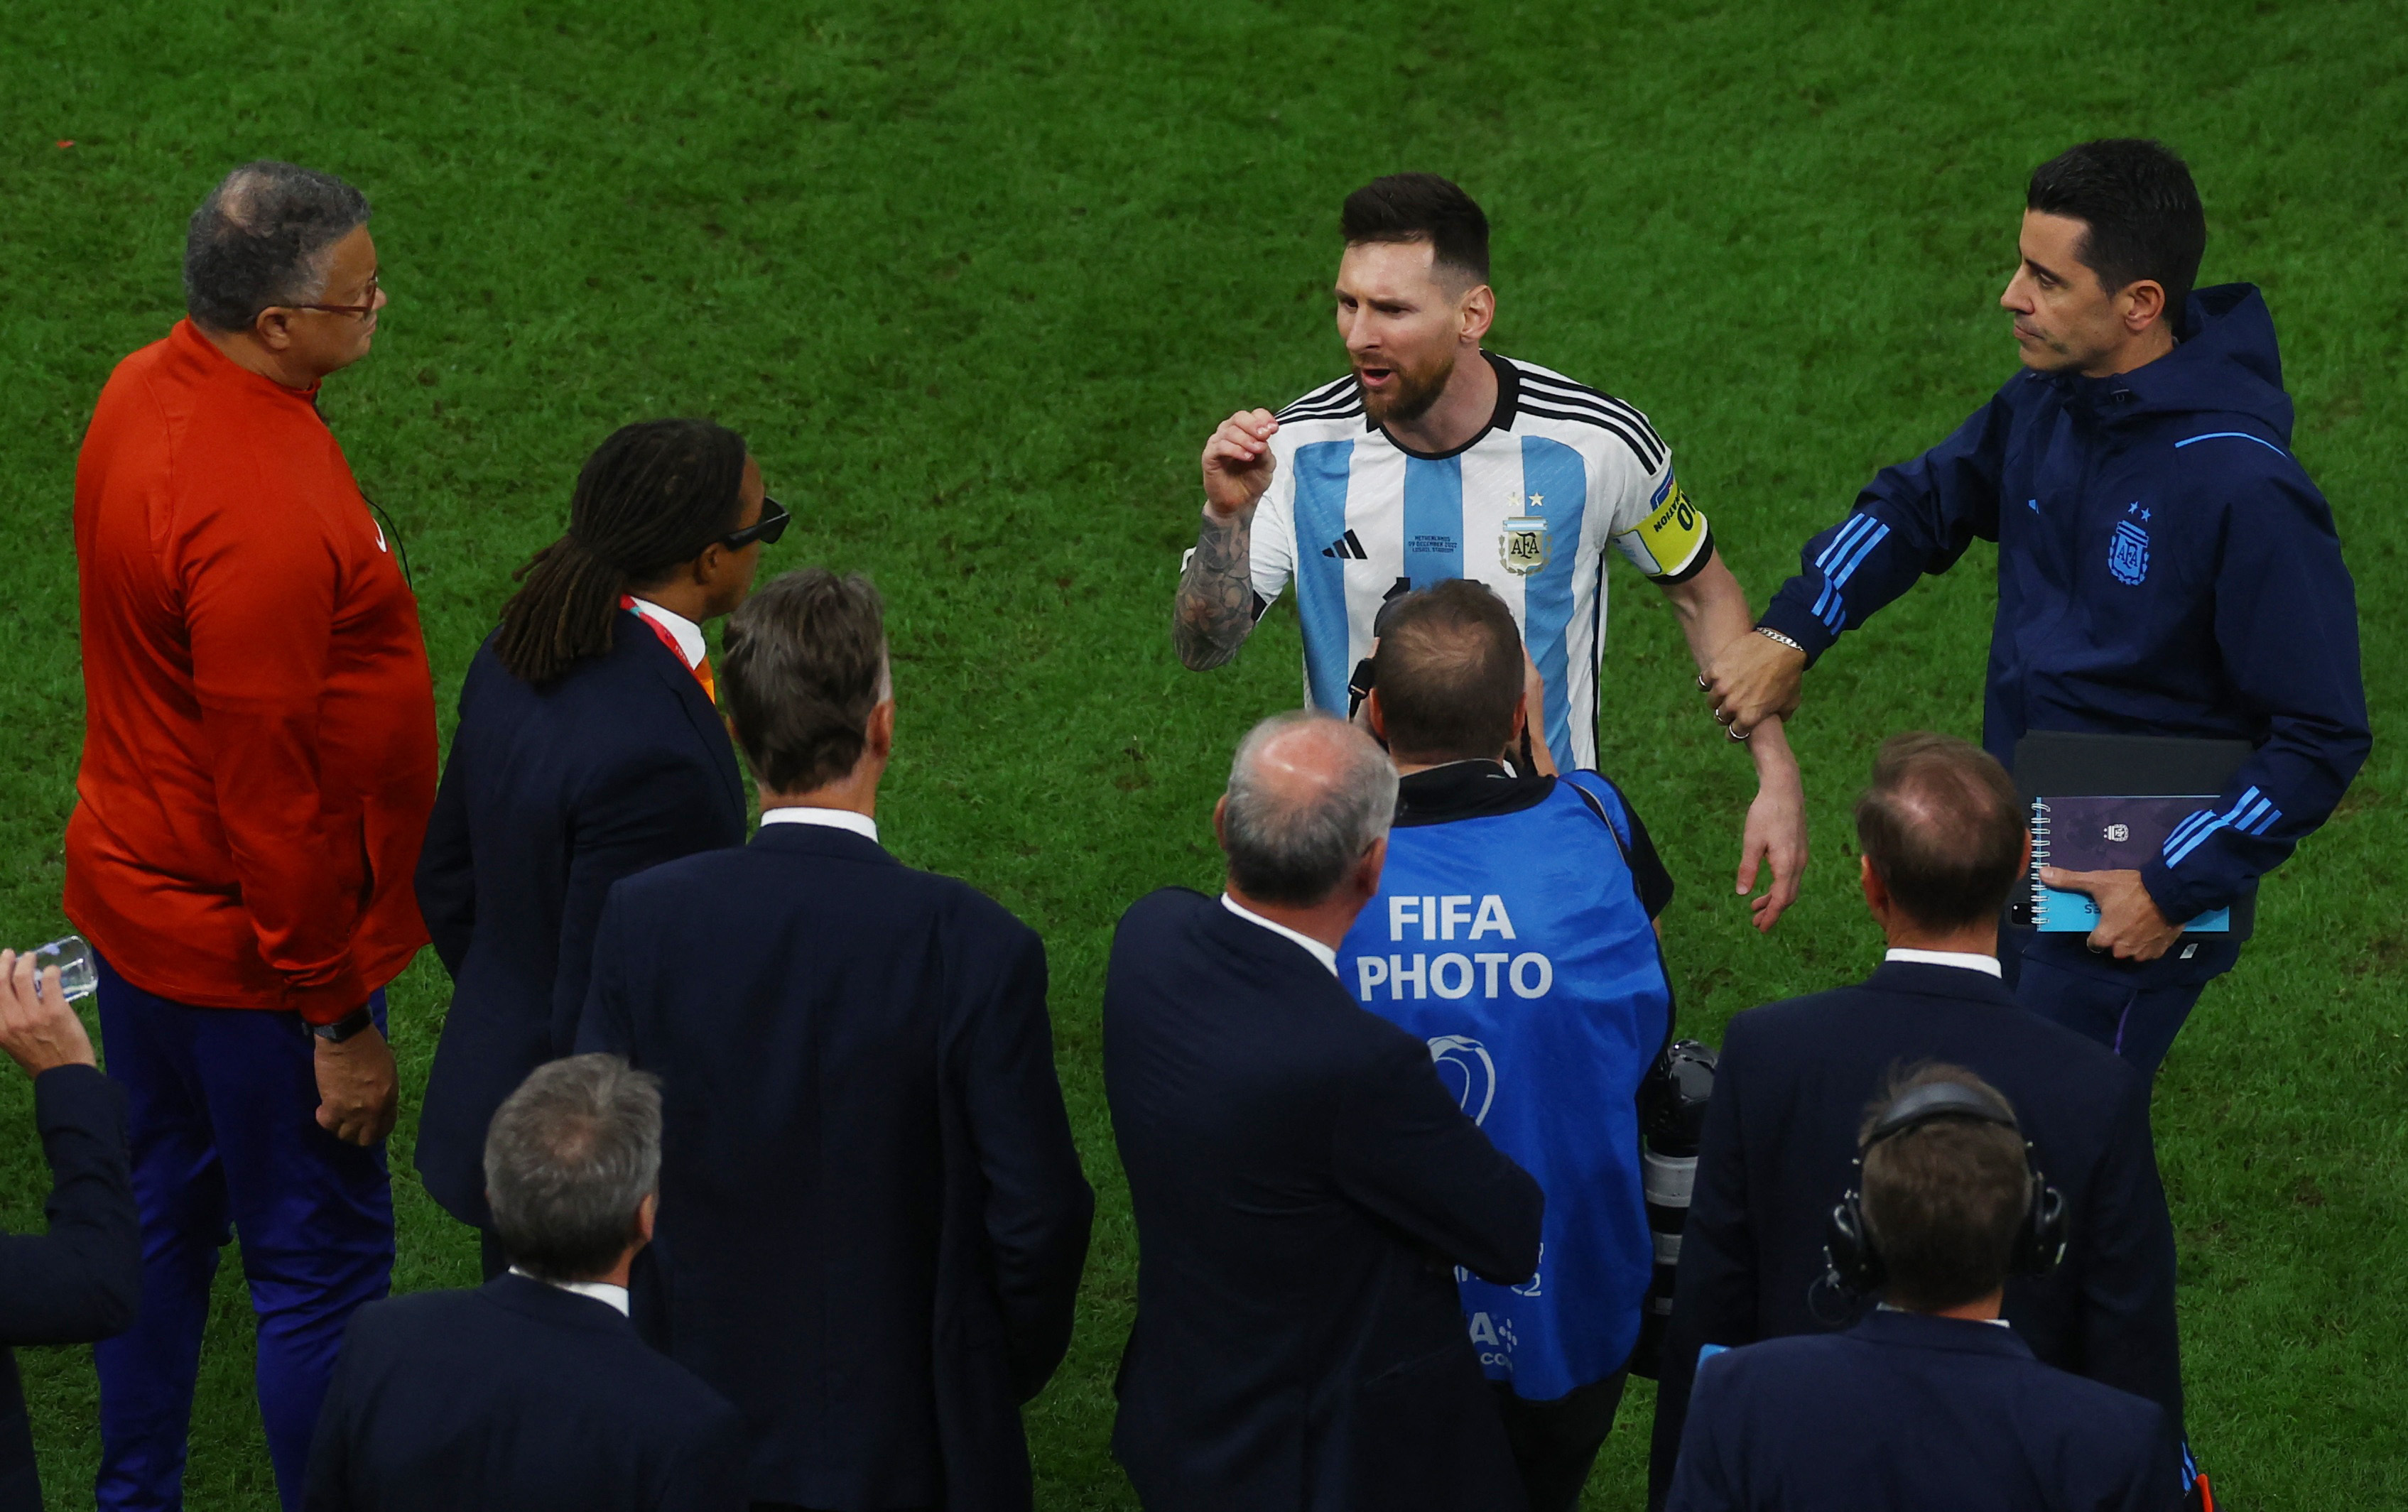 Messi increpó a Van Gaal y Davids después del partido (Getty Images)